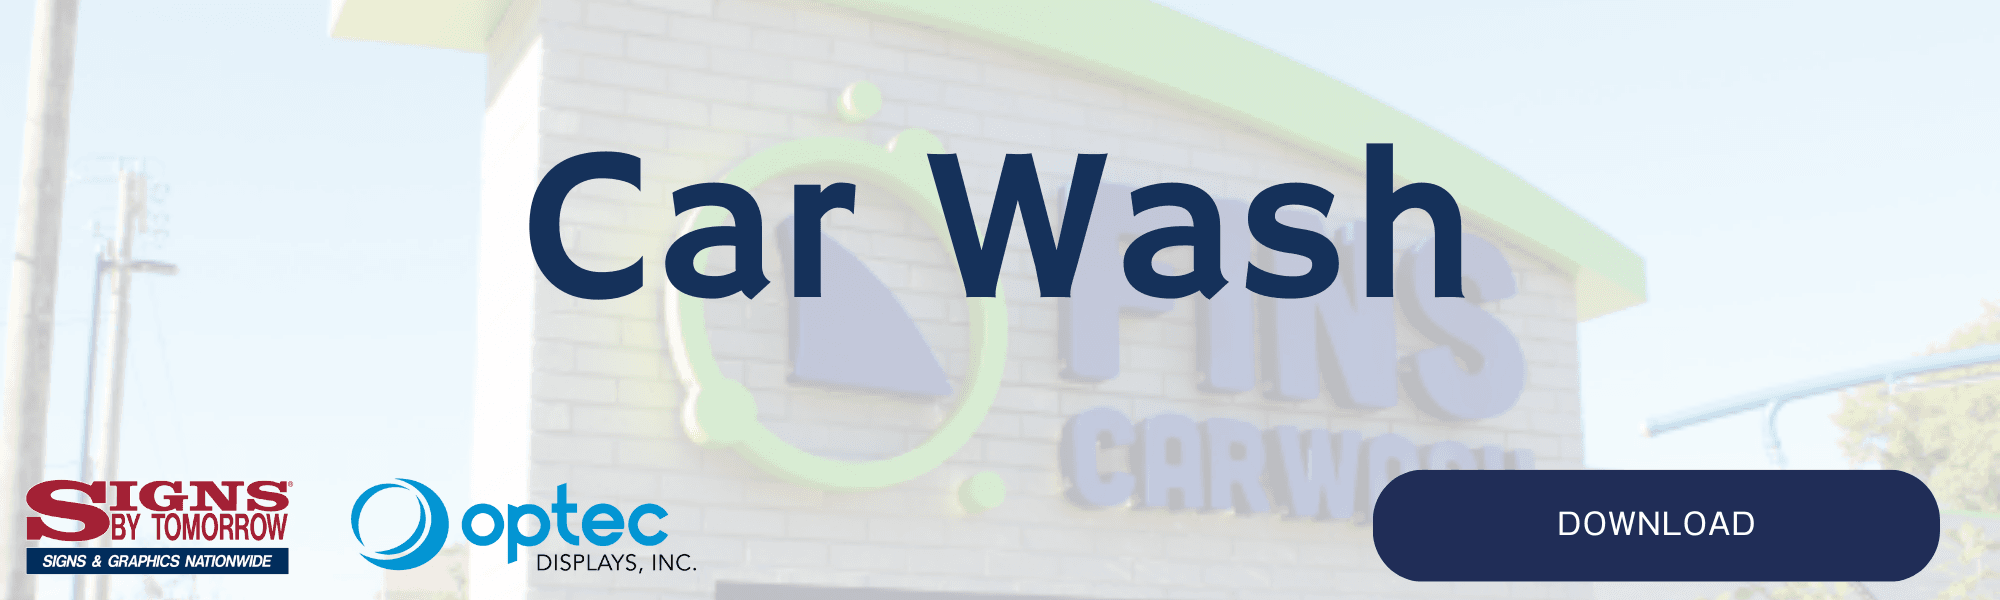 DOWNLOAD car wash